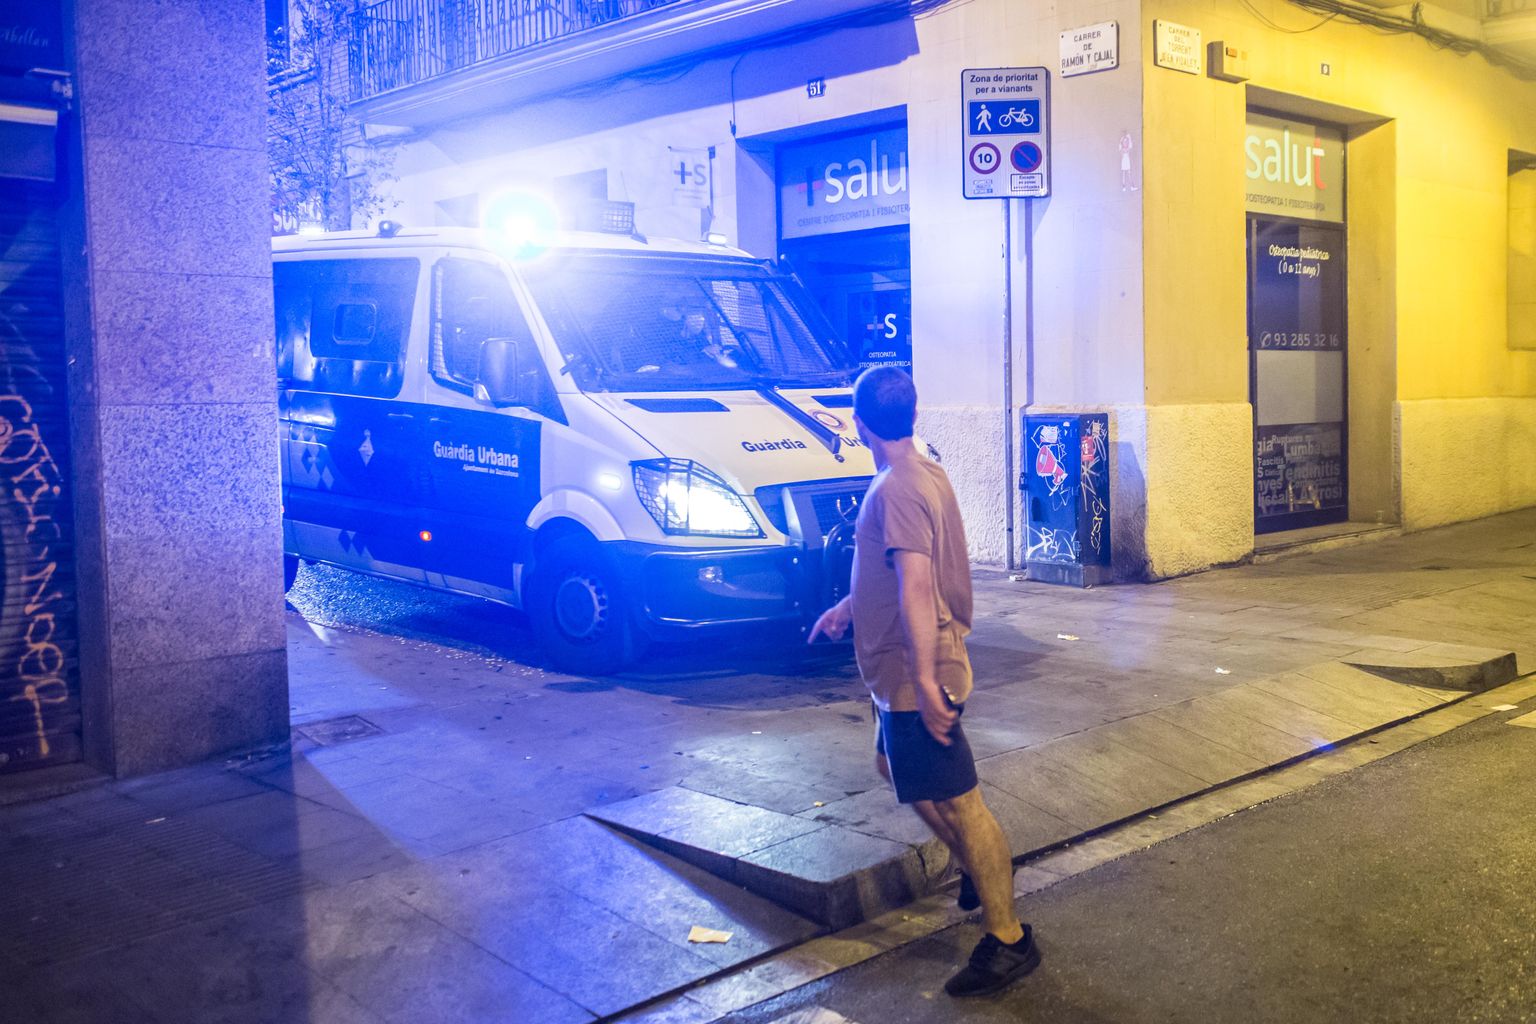 Barcelona politsei. Foto on illustratiivne.